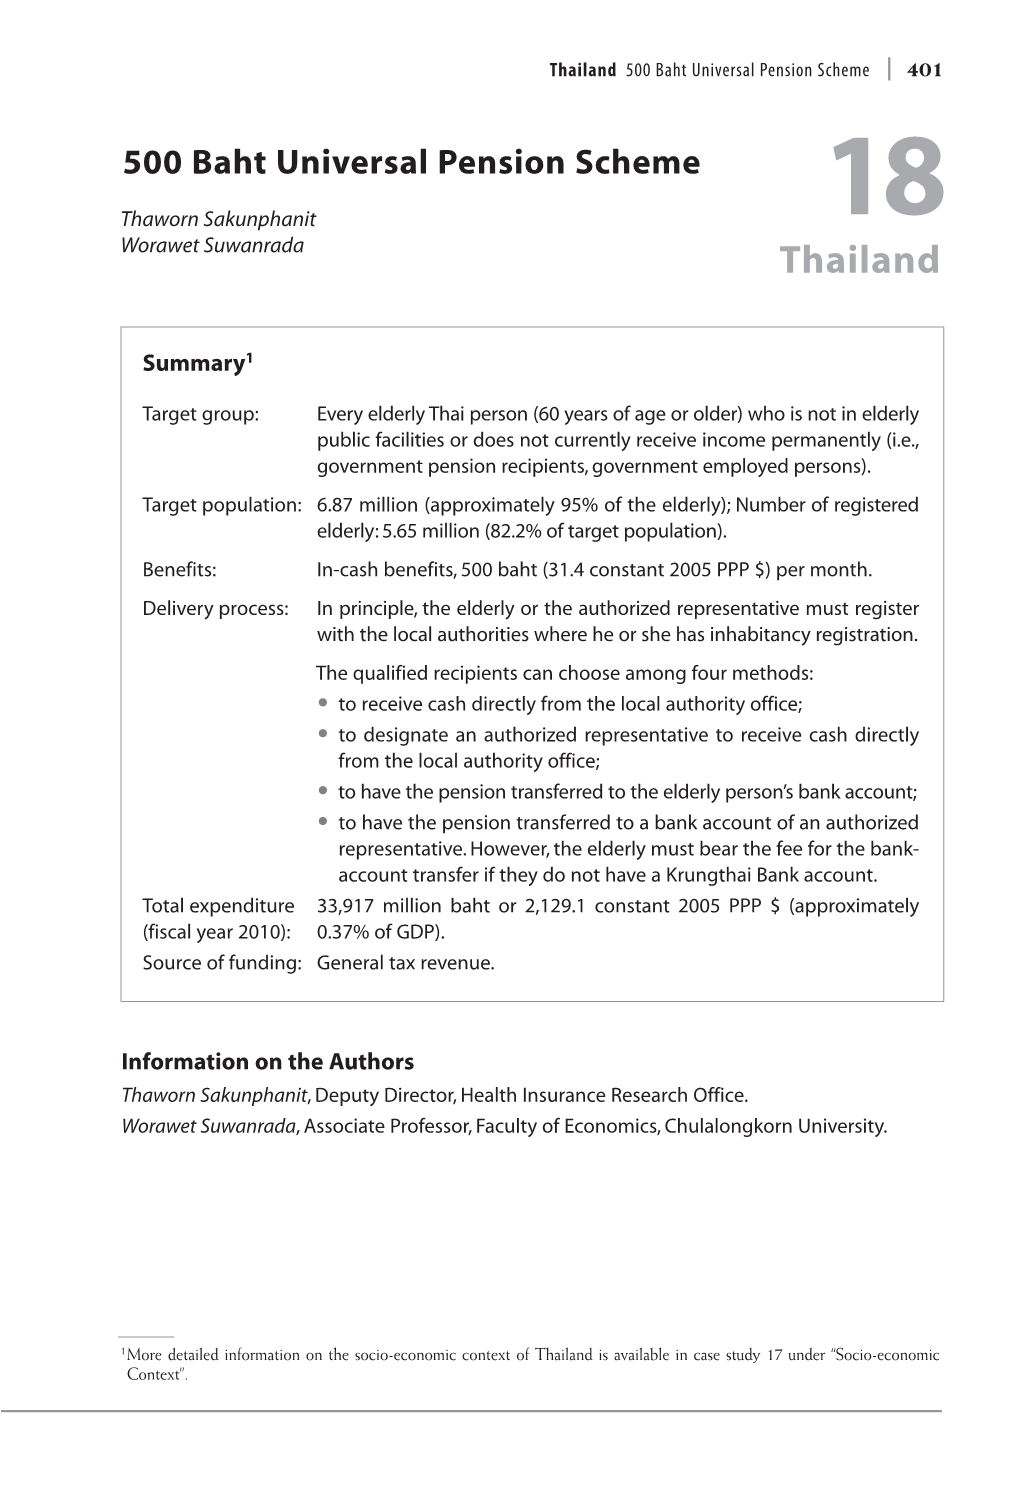 The 500 Baht Universal Pension Scheme – Thailand